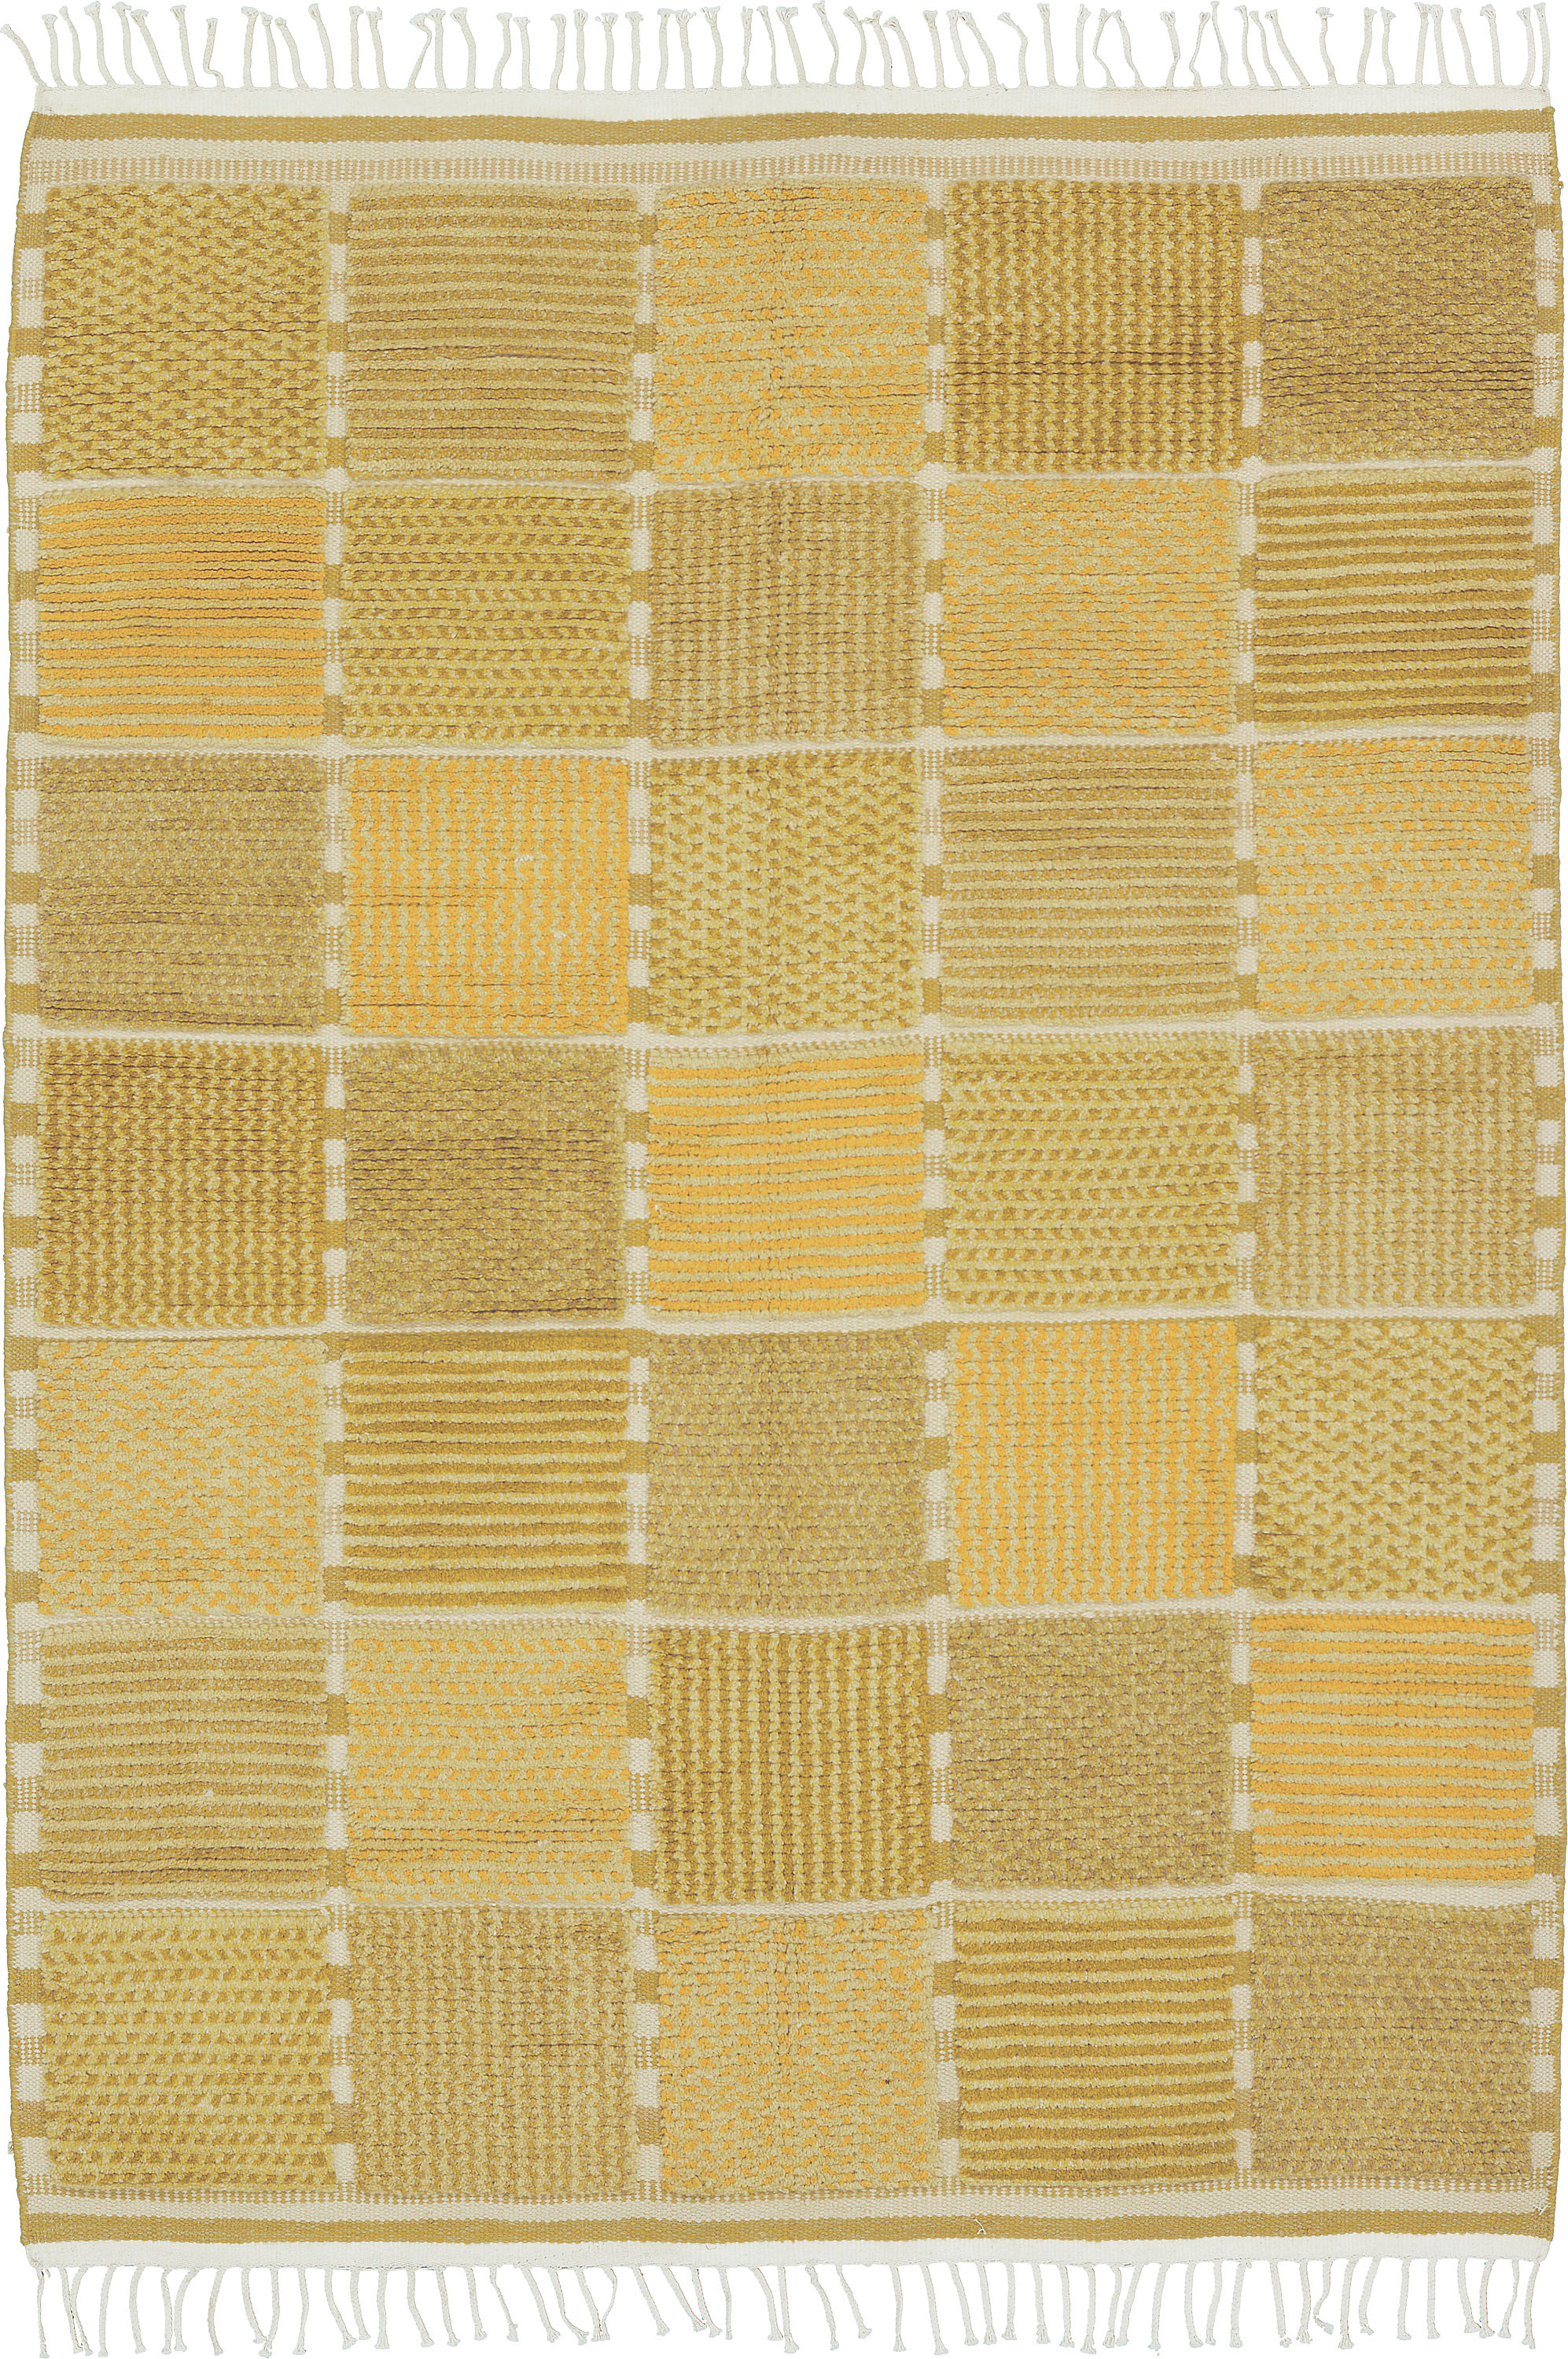 Fara Design | Custom Swedish Flat Weave and Pile Carpet | FJ Hakimian | Carpet Gallery in NY